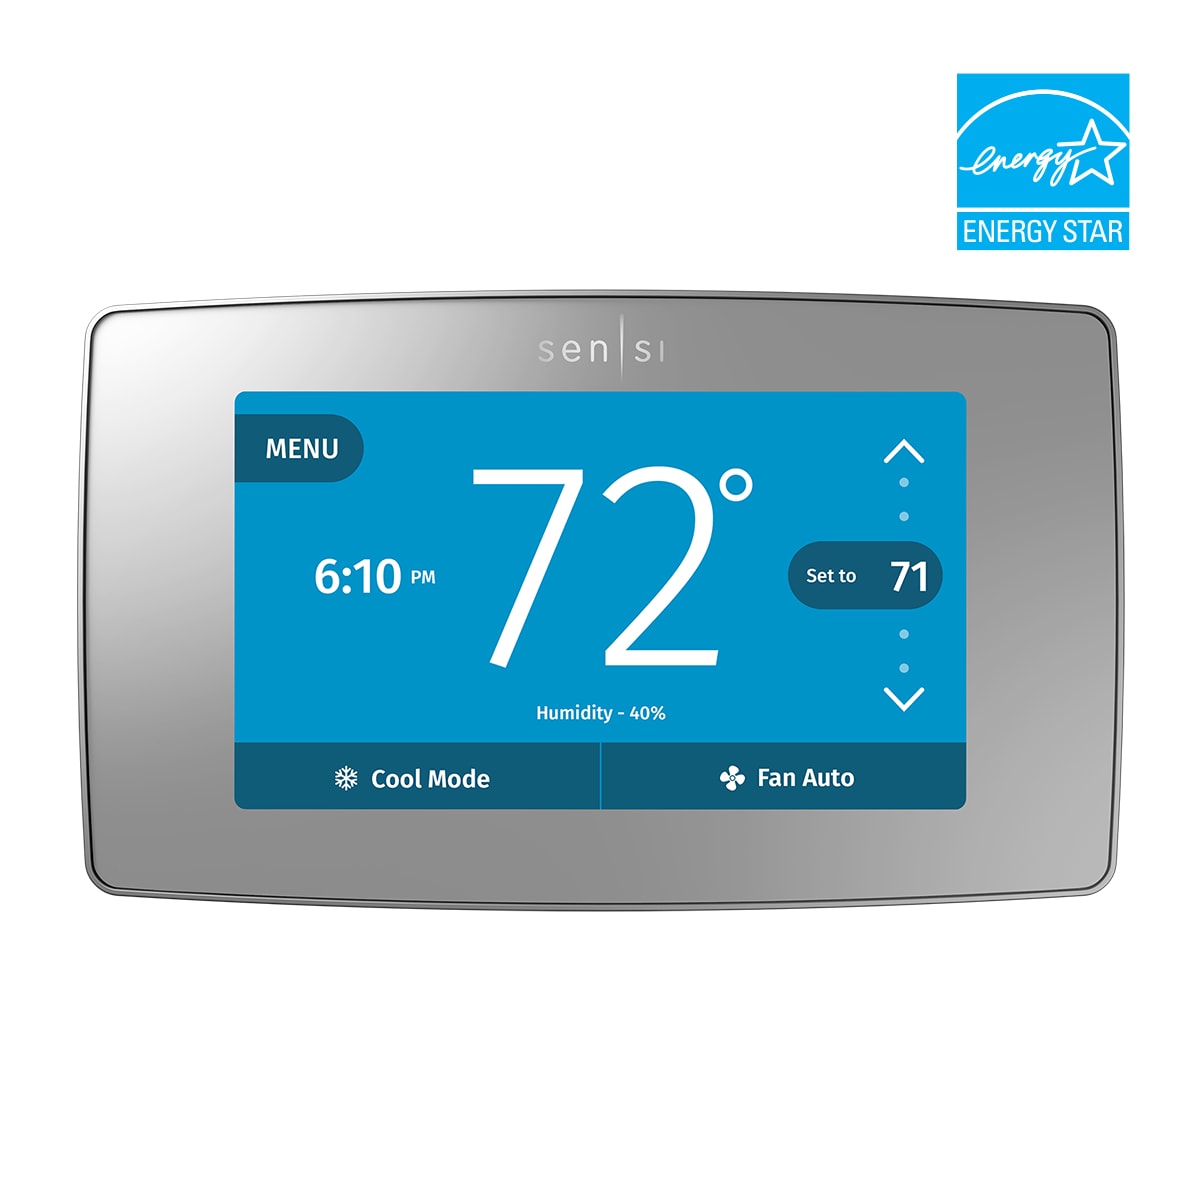 Emerson Sensi Silver Smart Thermostat With Wi Fi Compatibility In The 